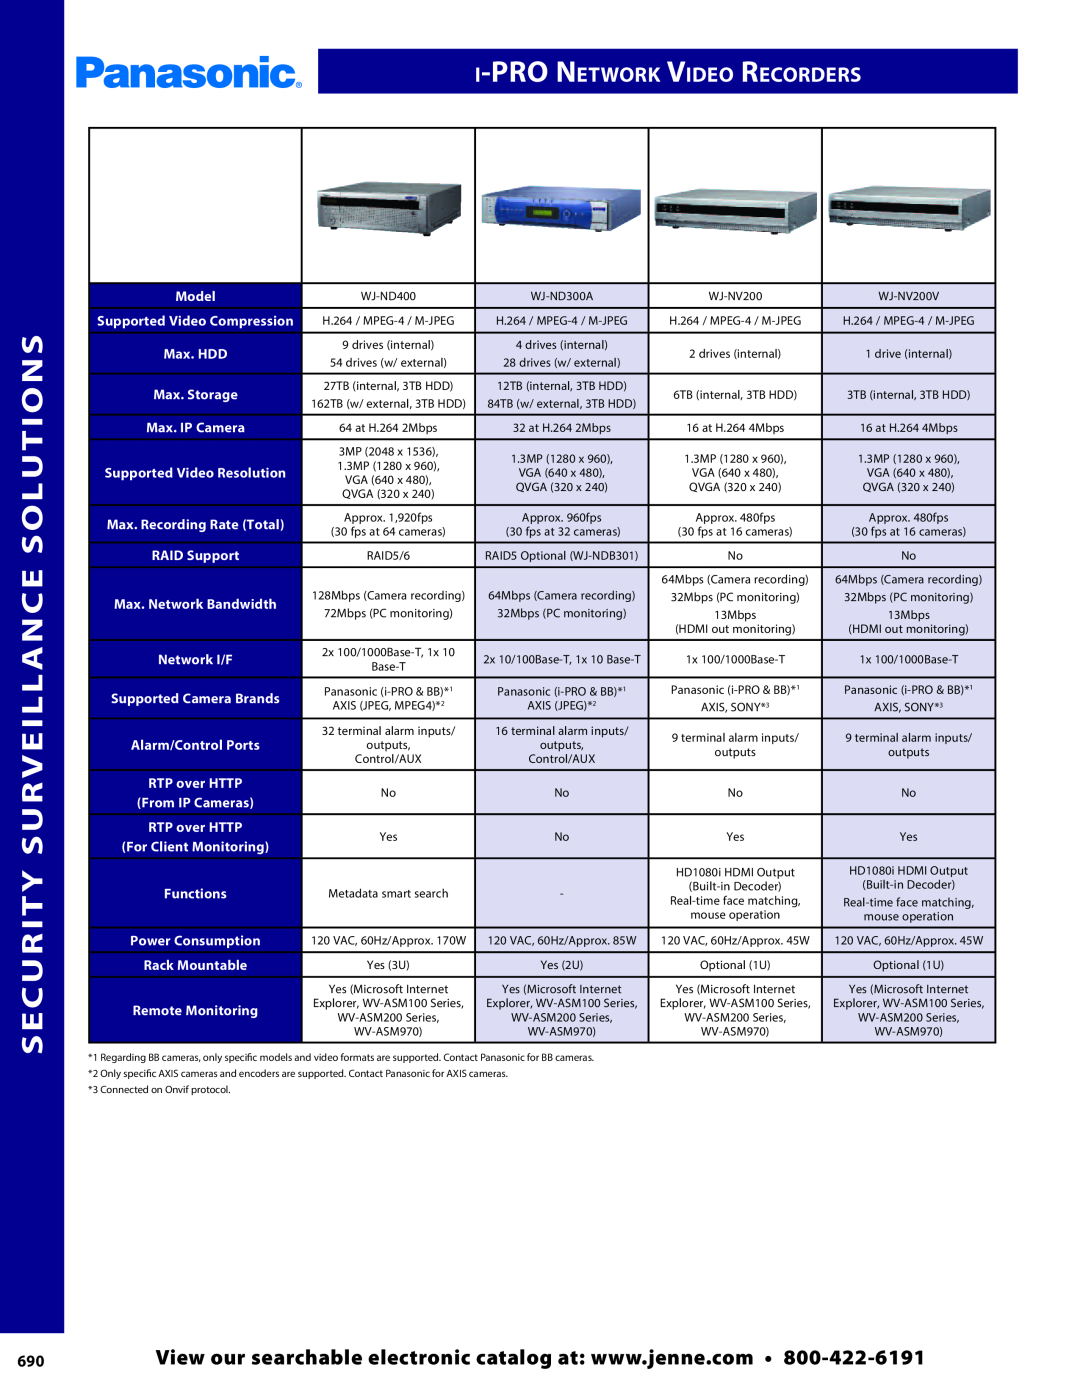 Panasonic PMPU2000 manual i-PRONetwork Video Recorders, Security Surveillance Solutions 